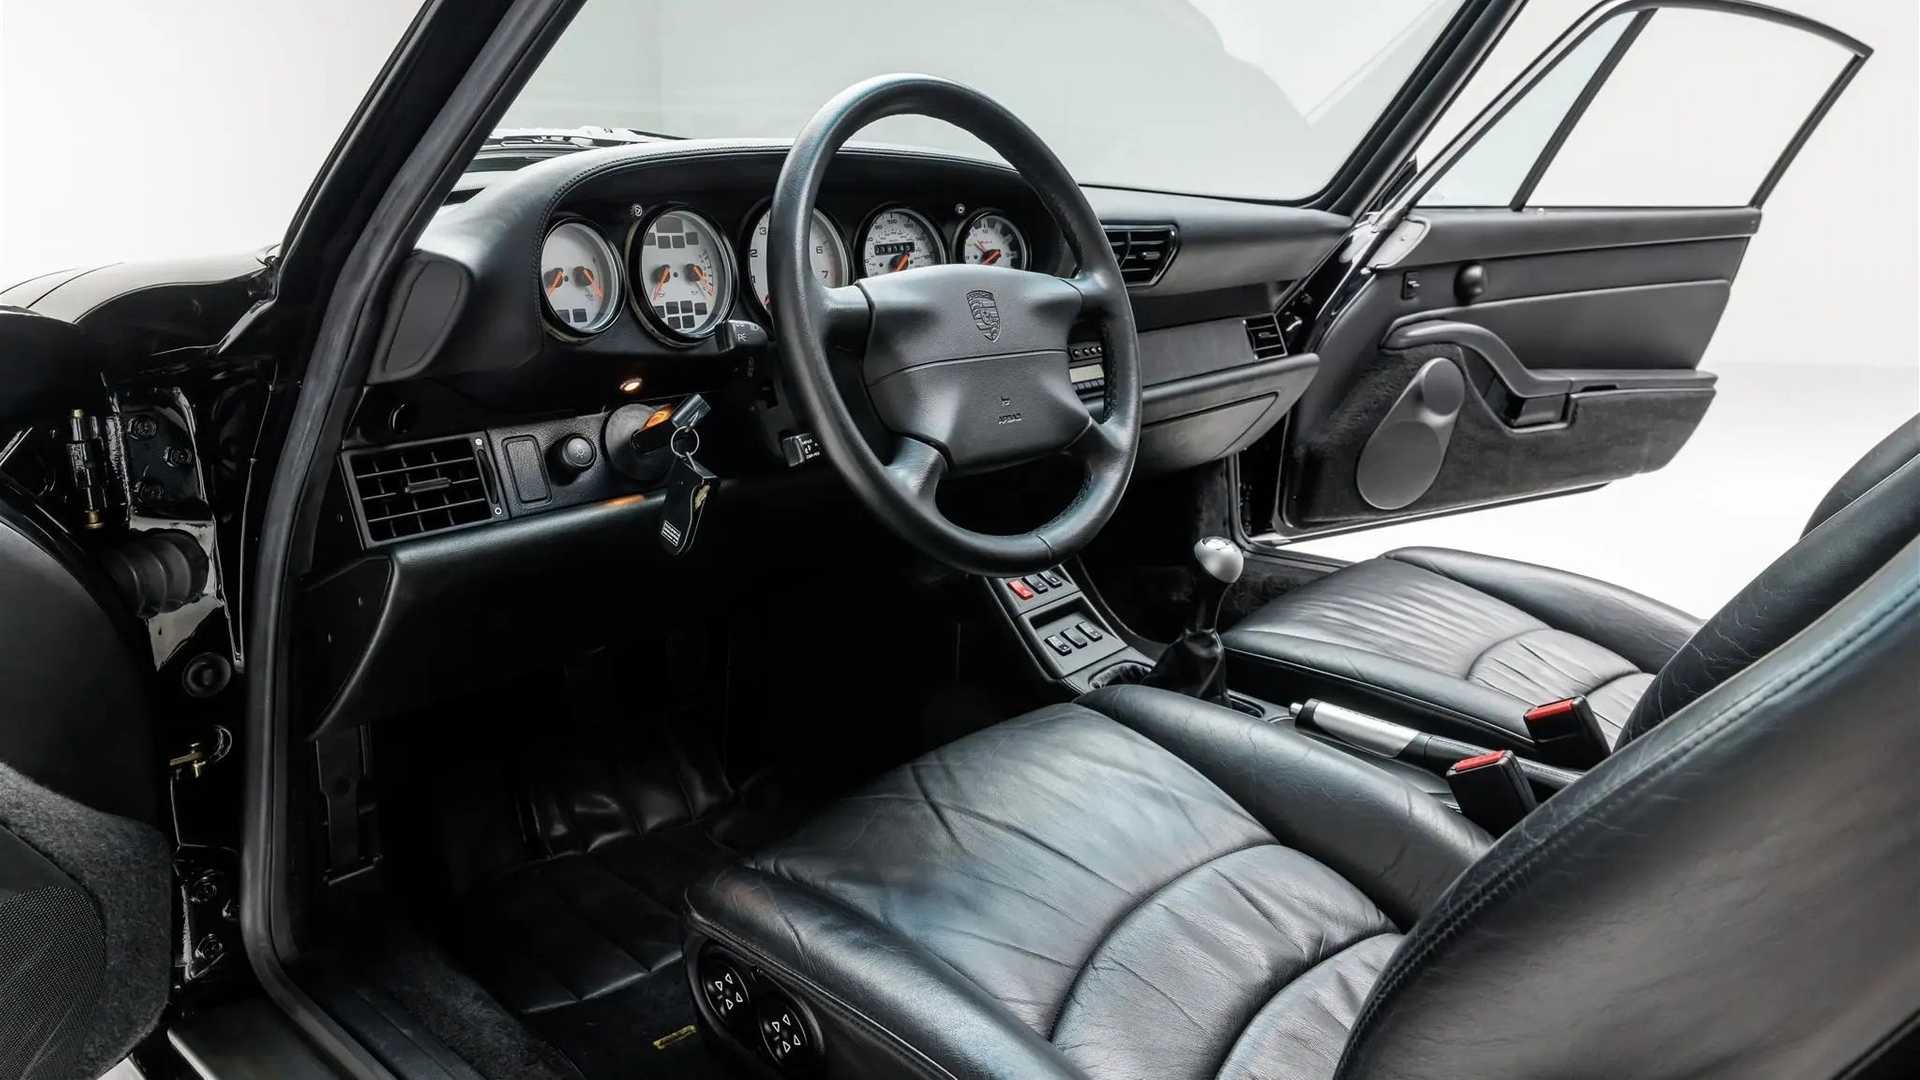 911 993 Turbo interior